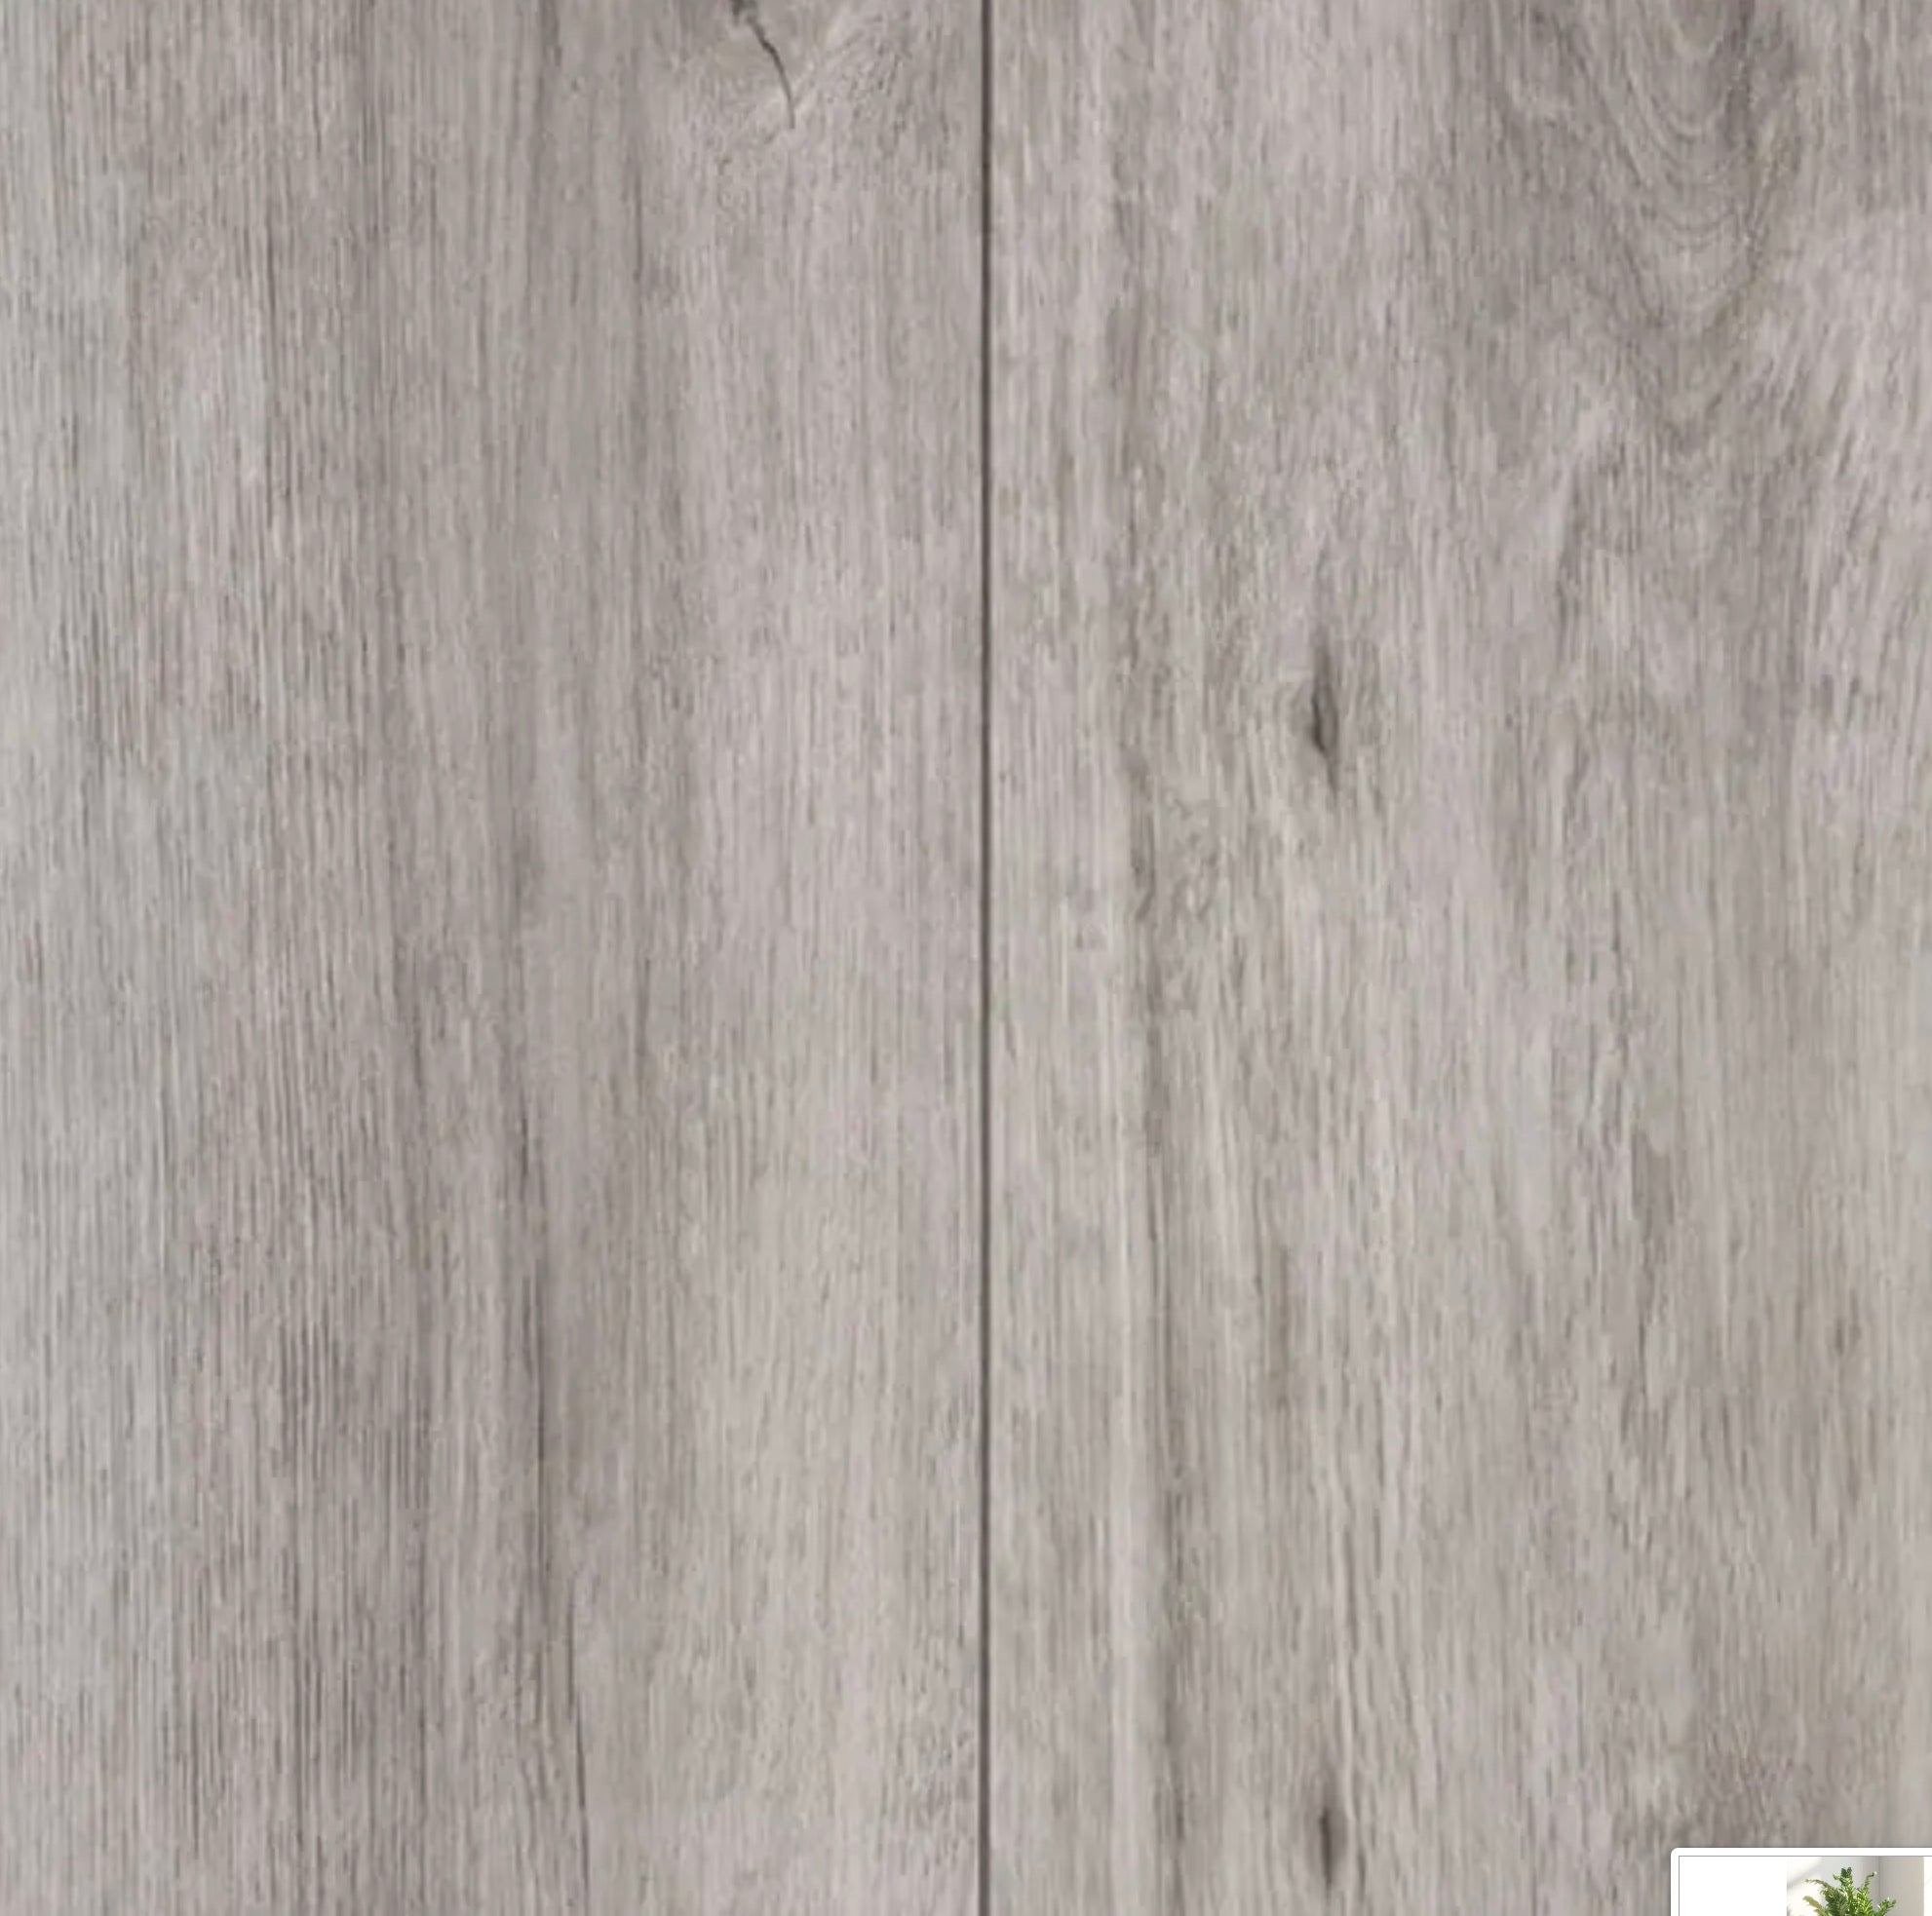 Clixeal Plank Flooring - Morlich Oak